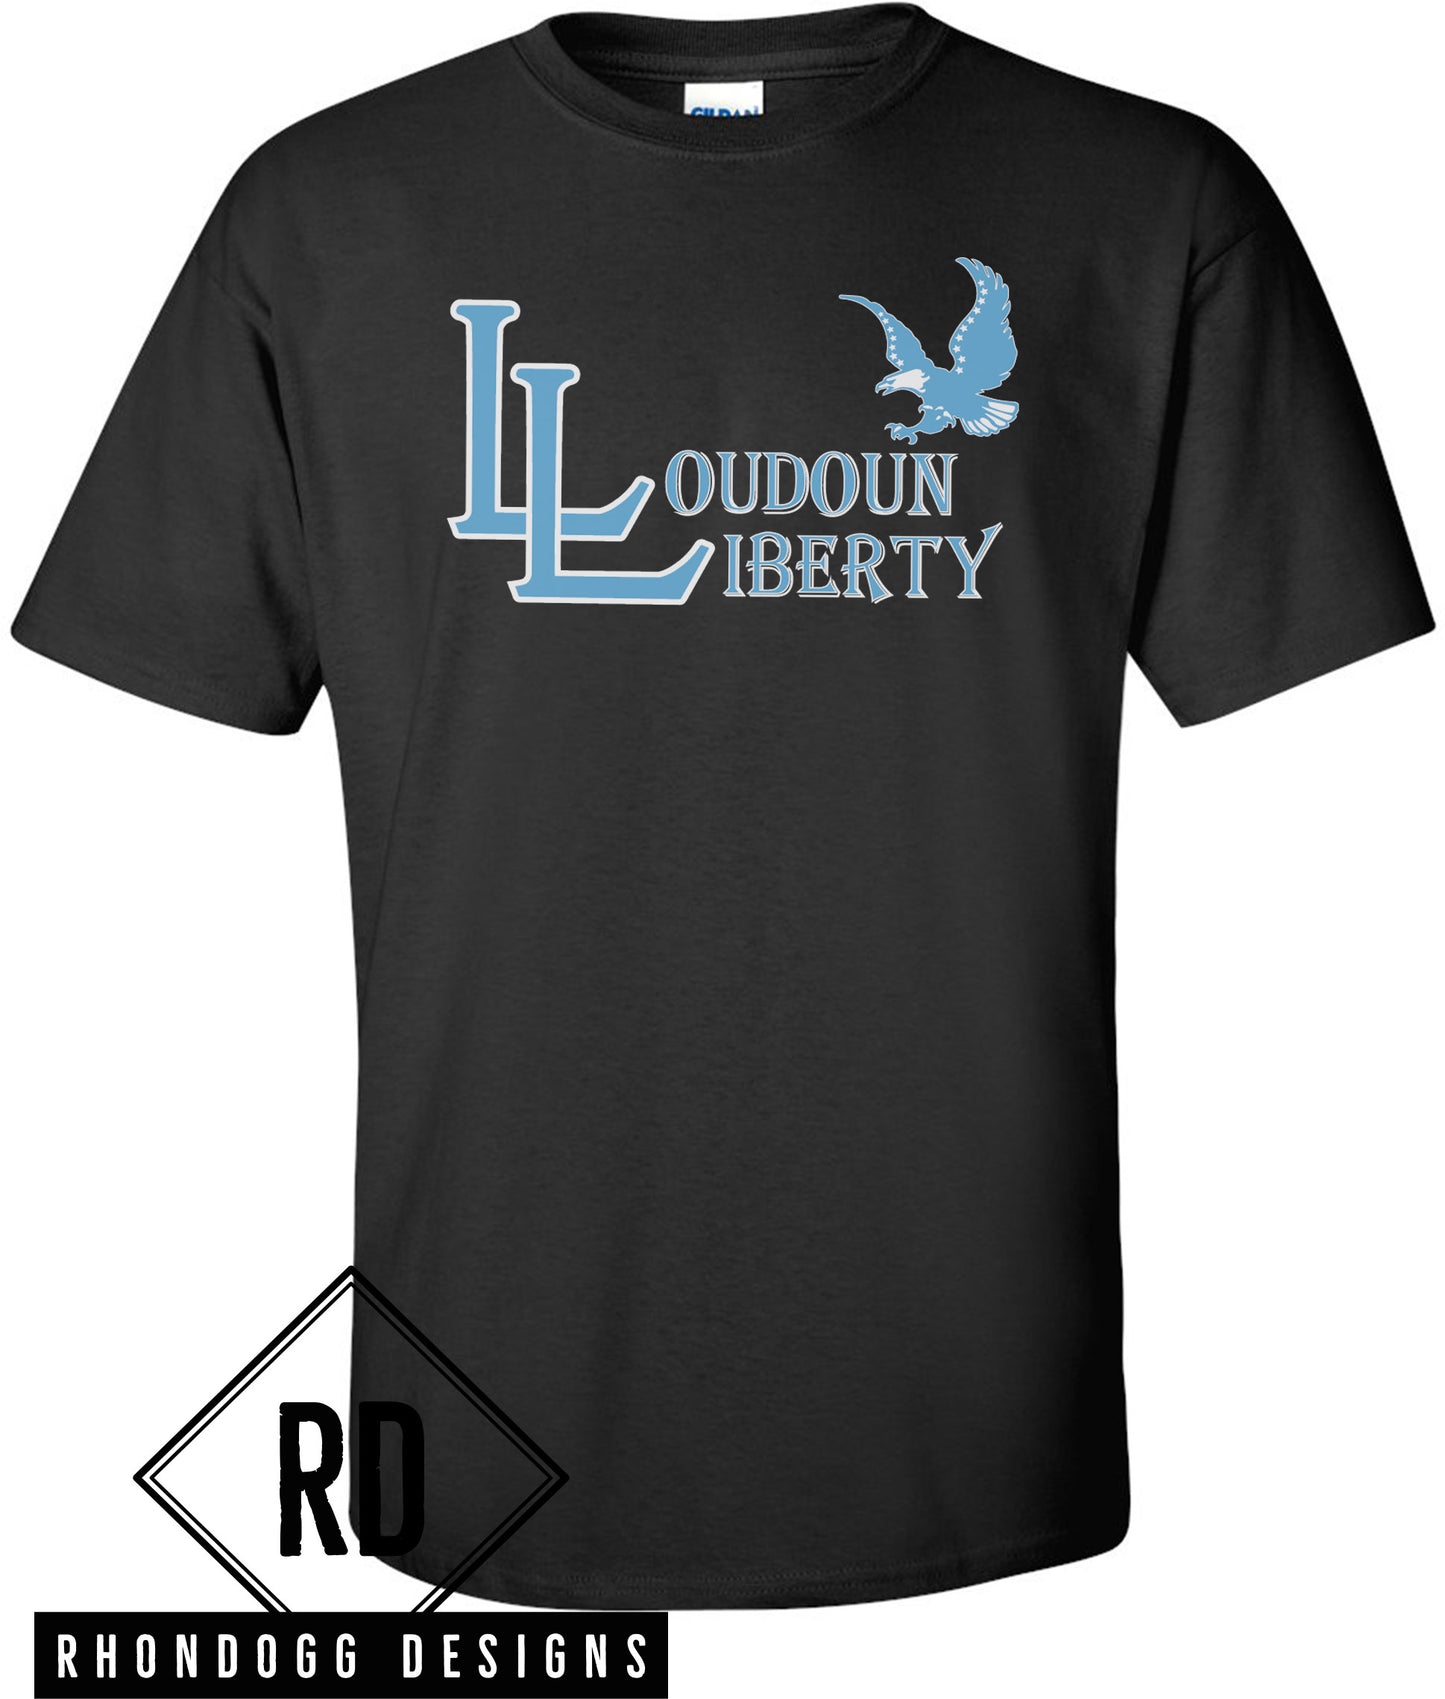 Loudoun Liberty Cotton T-Shirt